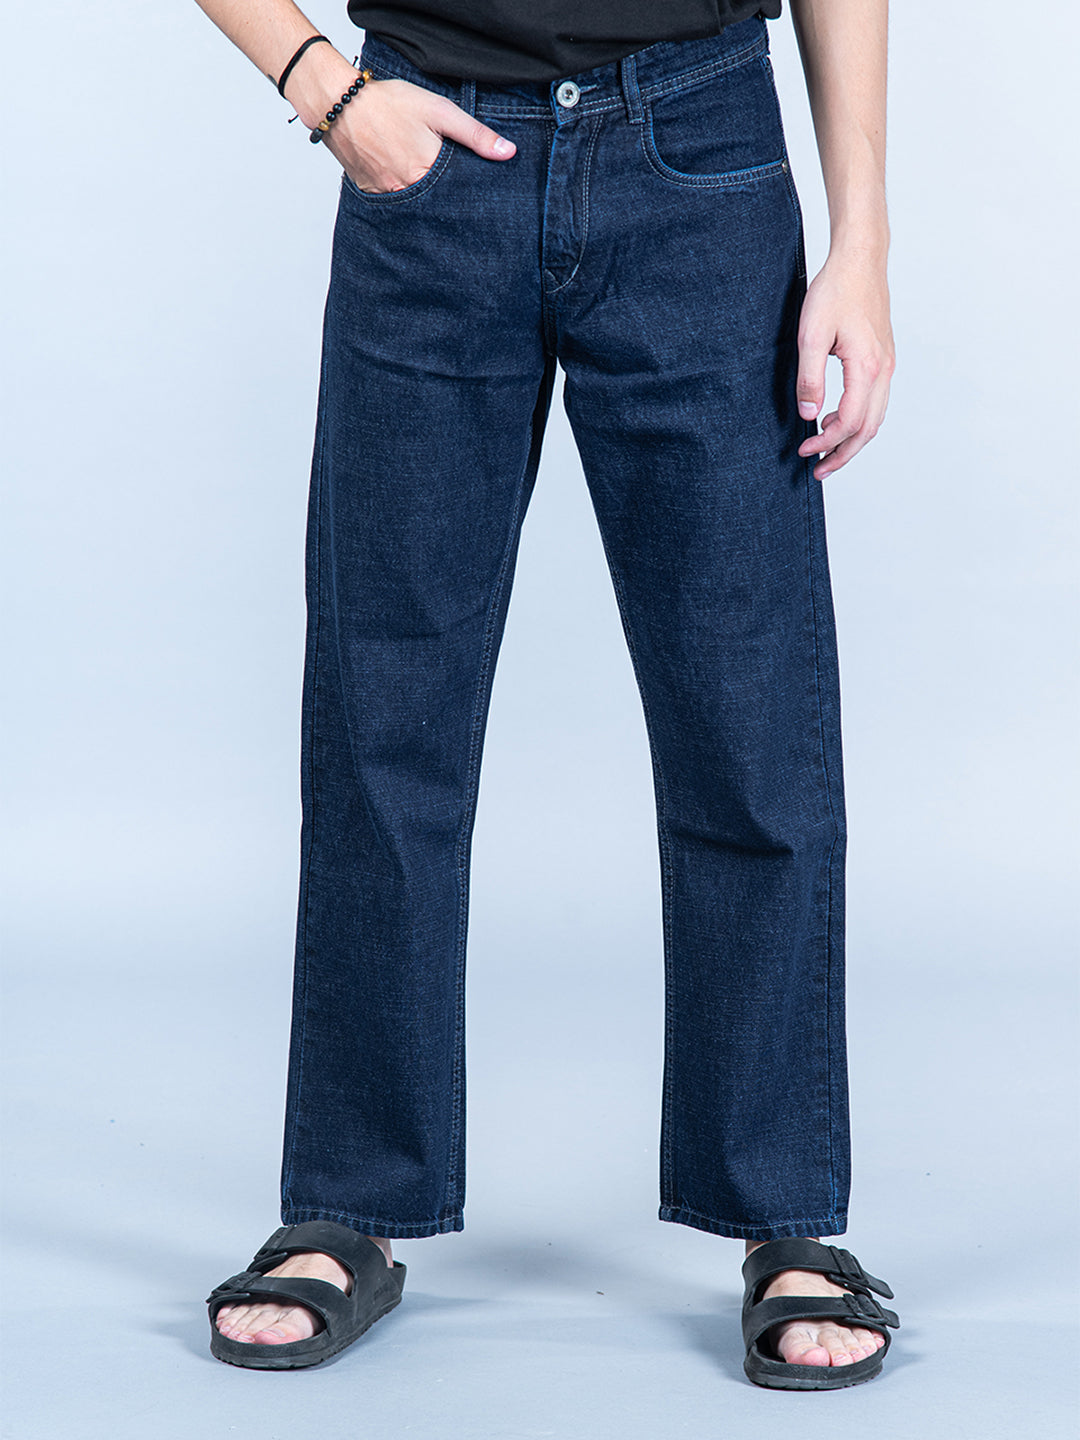 RDNM410 - Men's Loose Fit Jeans | Loose fit jeans, Jeans outfit men, Jeans  fit